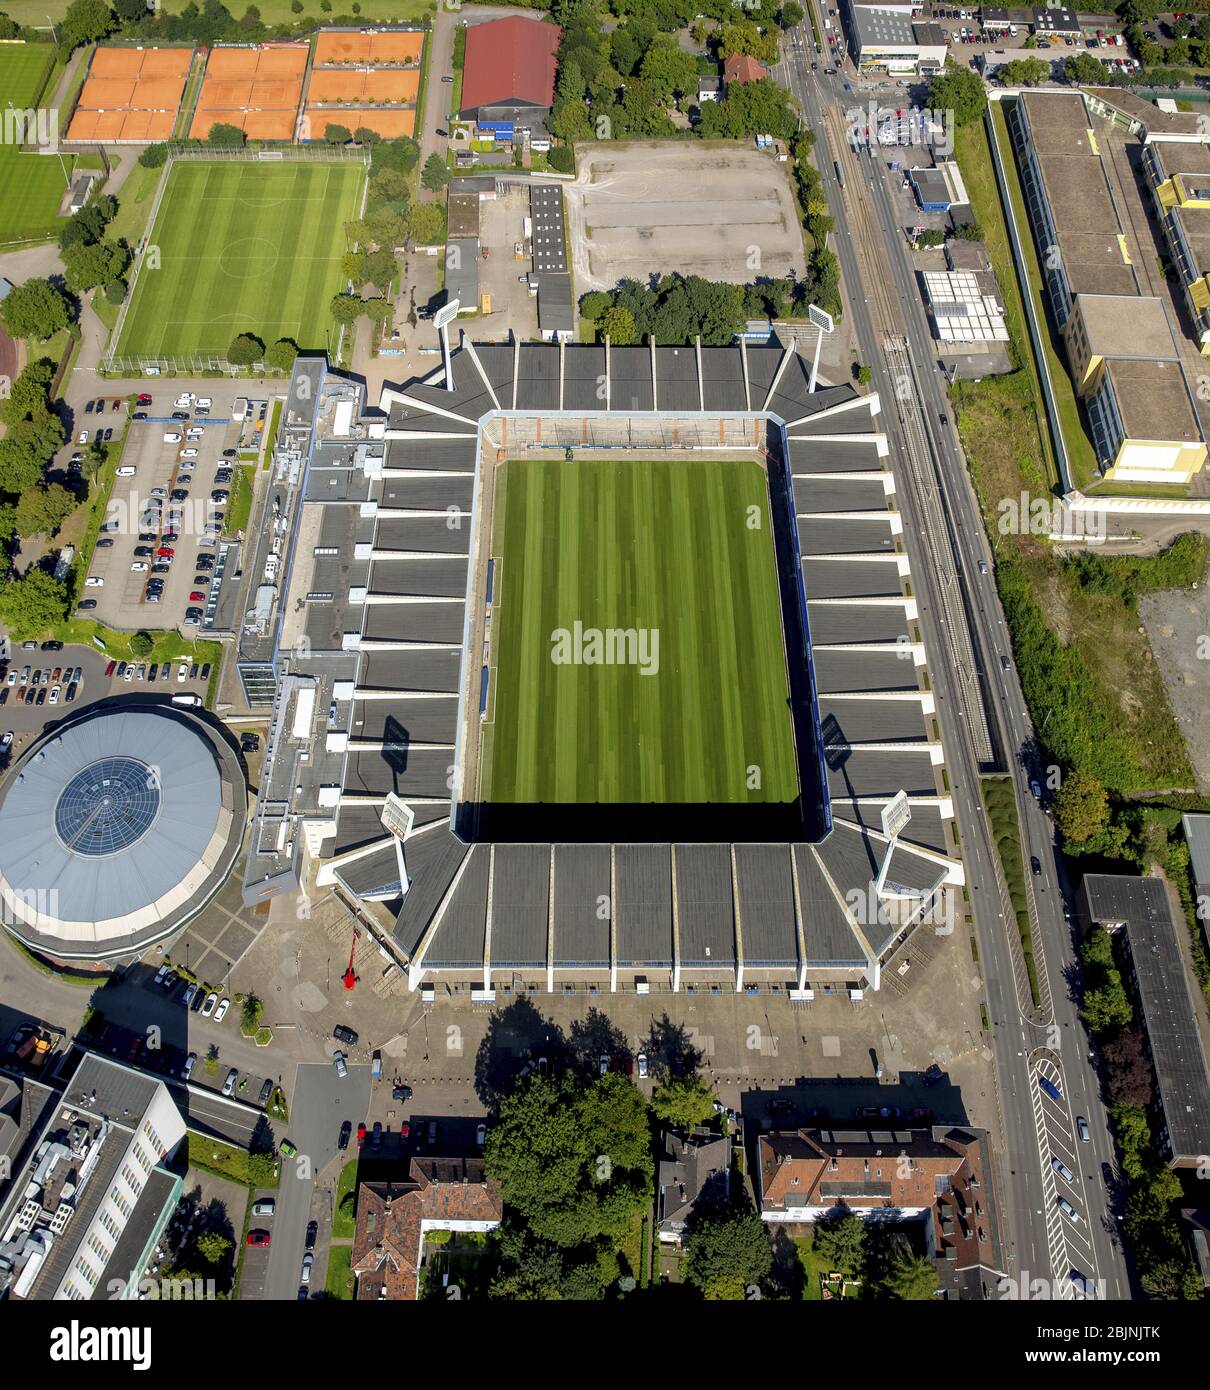 , stadium rewirpowerSTADION at Castroper Strasse in Bochum, 17.08.2016, aerial view, Germany, North Rhine-Westphalia, Ruhr Area, Bochum Stock Photo